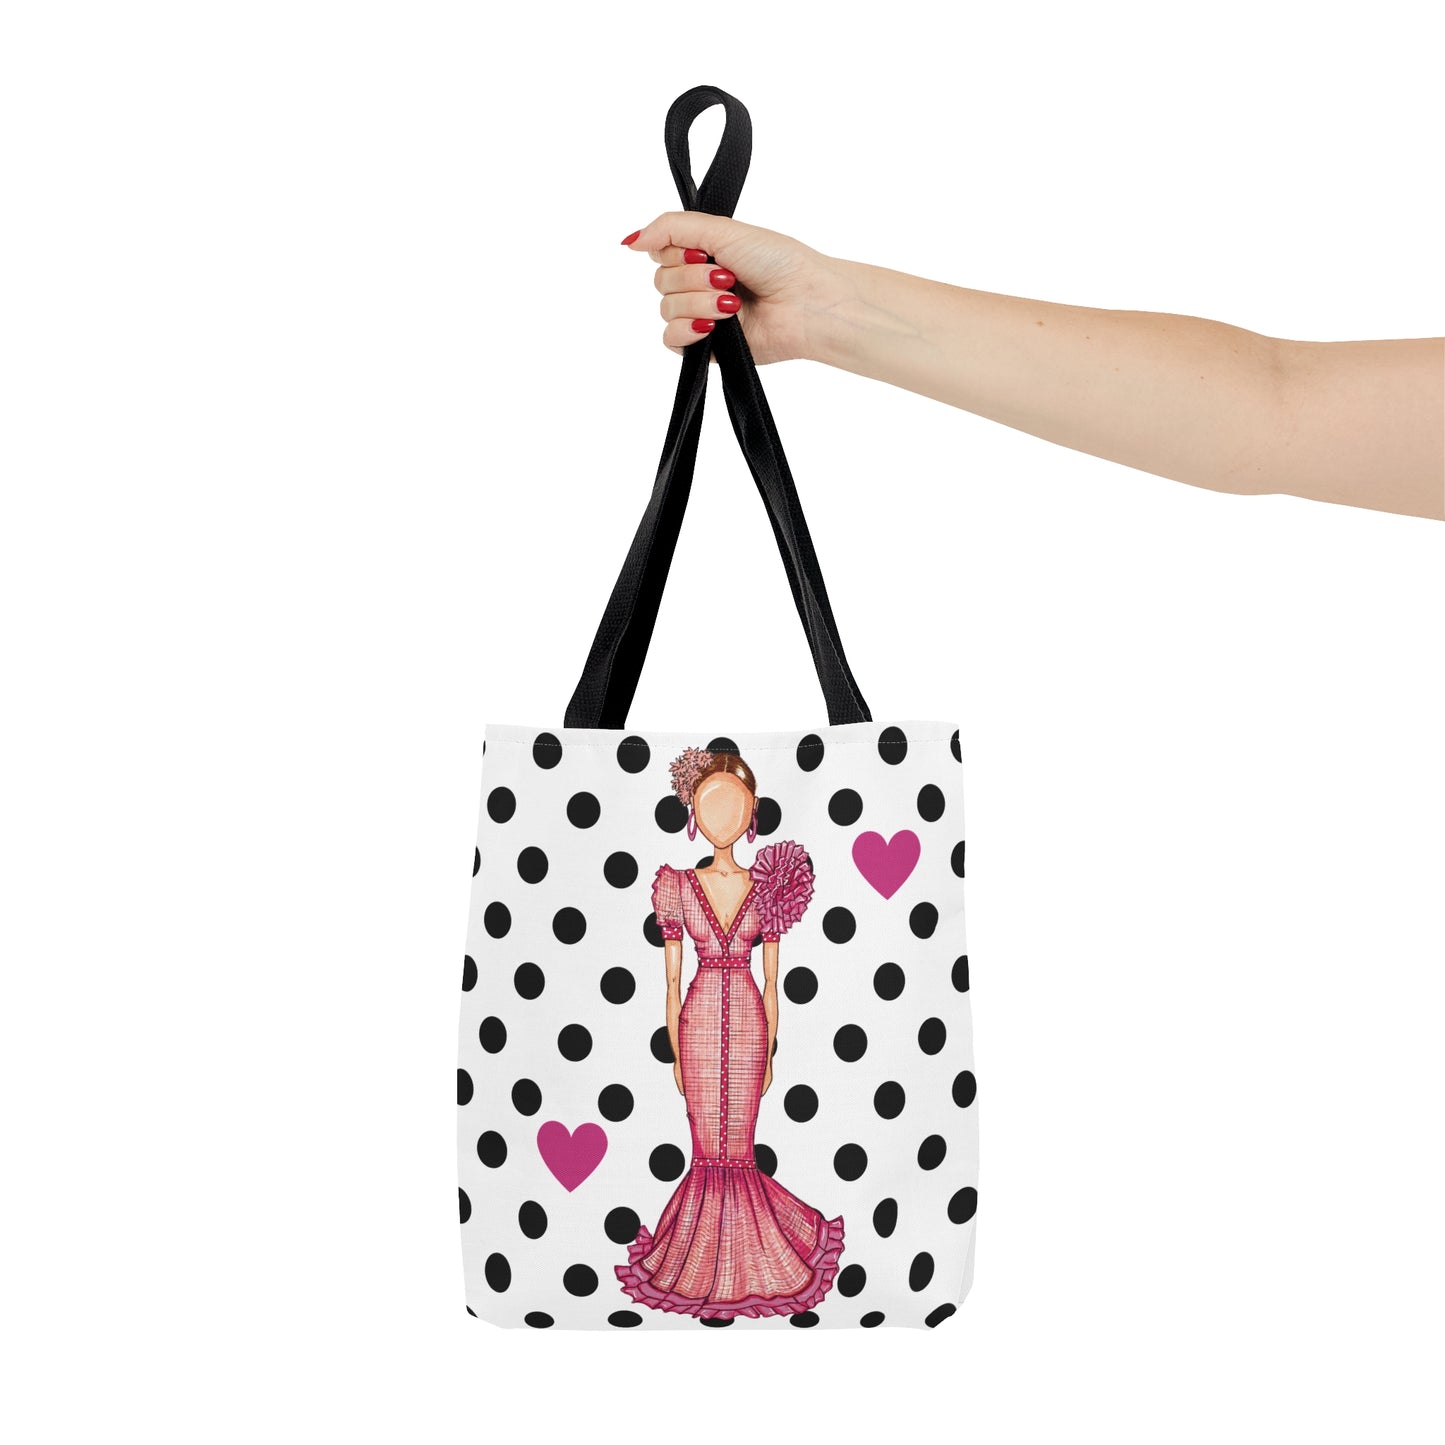 a woman's hand holding a polka dot purse